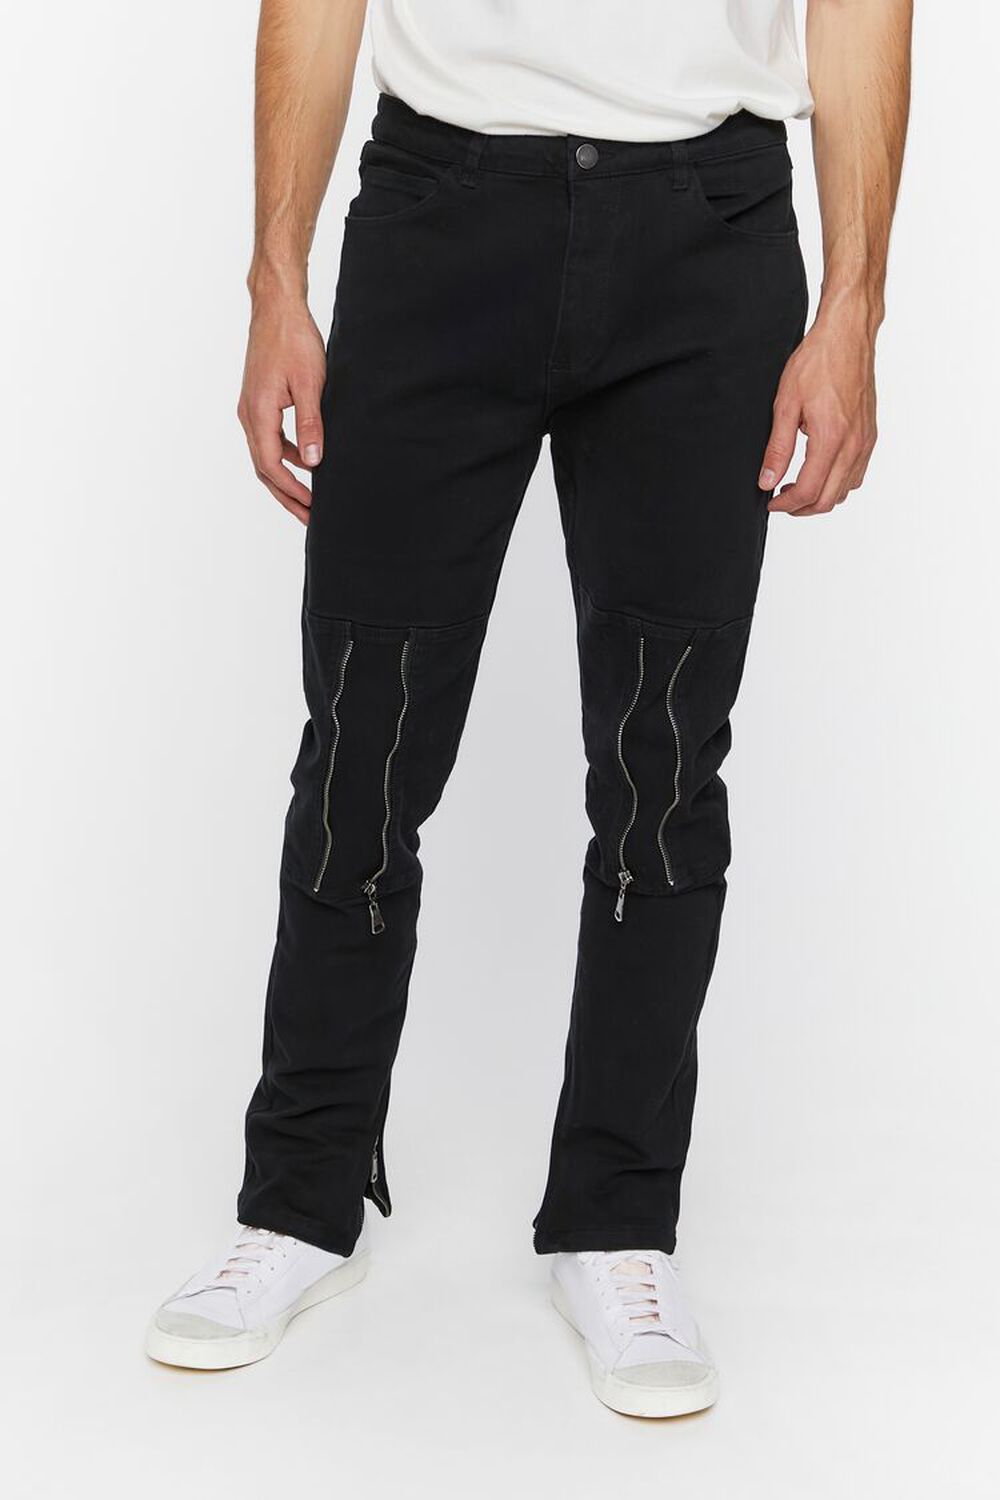 BLACK Twill Slim-Fit Zippered Pants, image 2